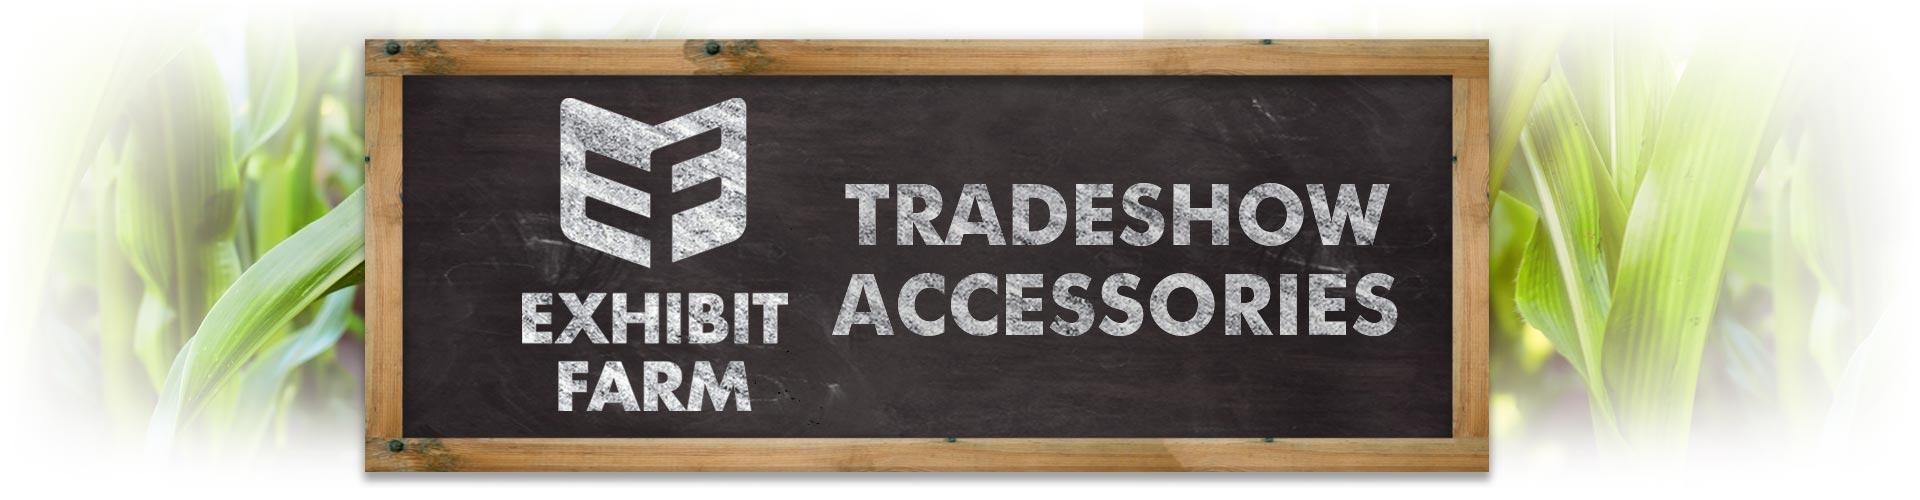 Trade Show Accessories Header